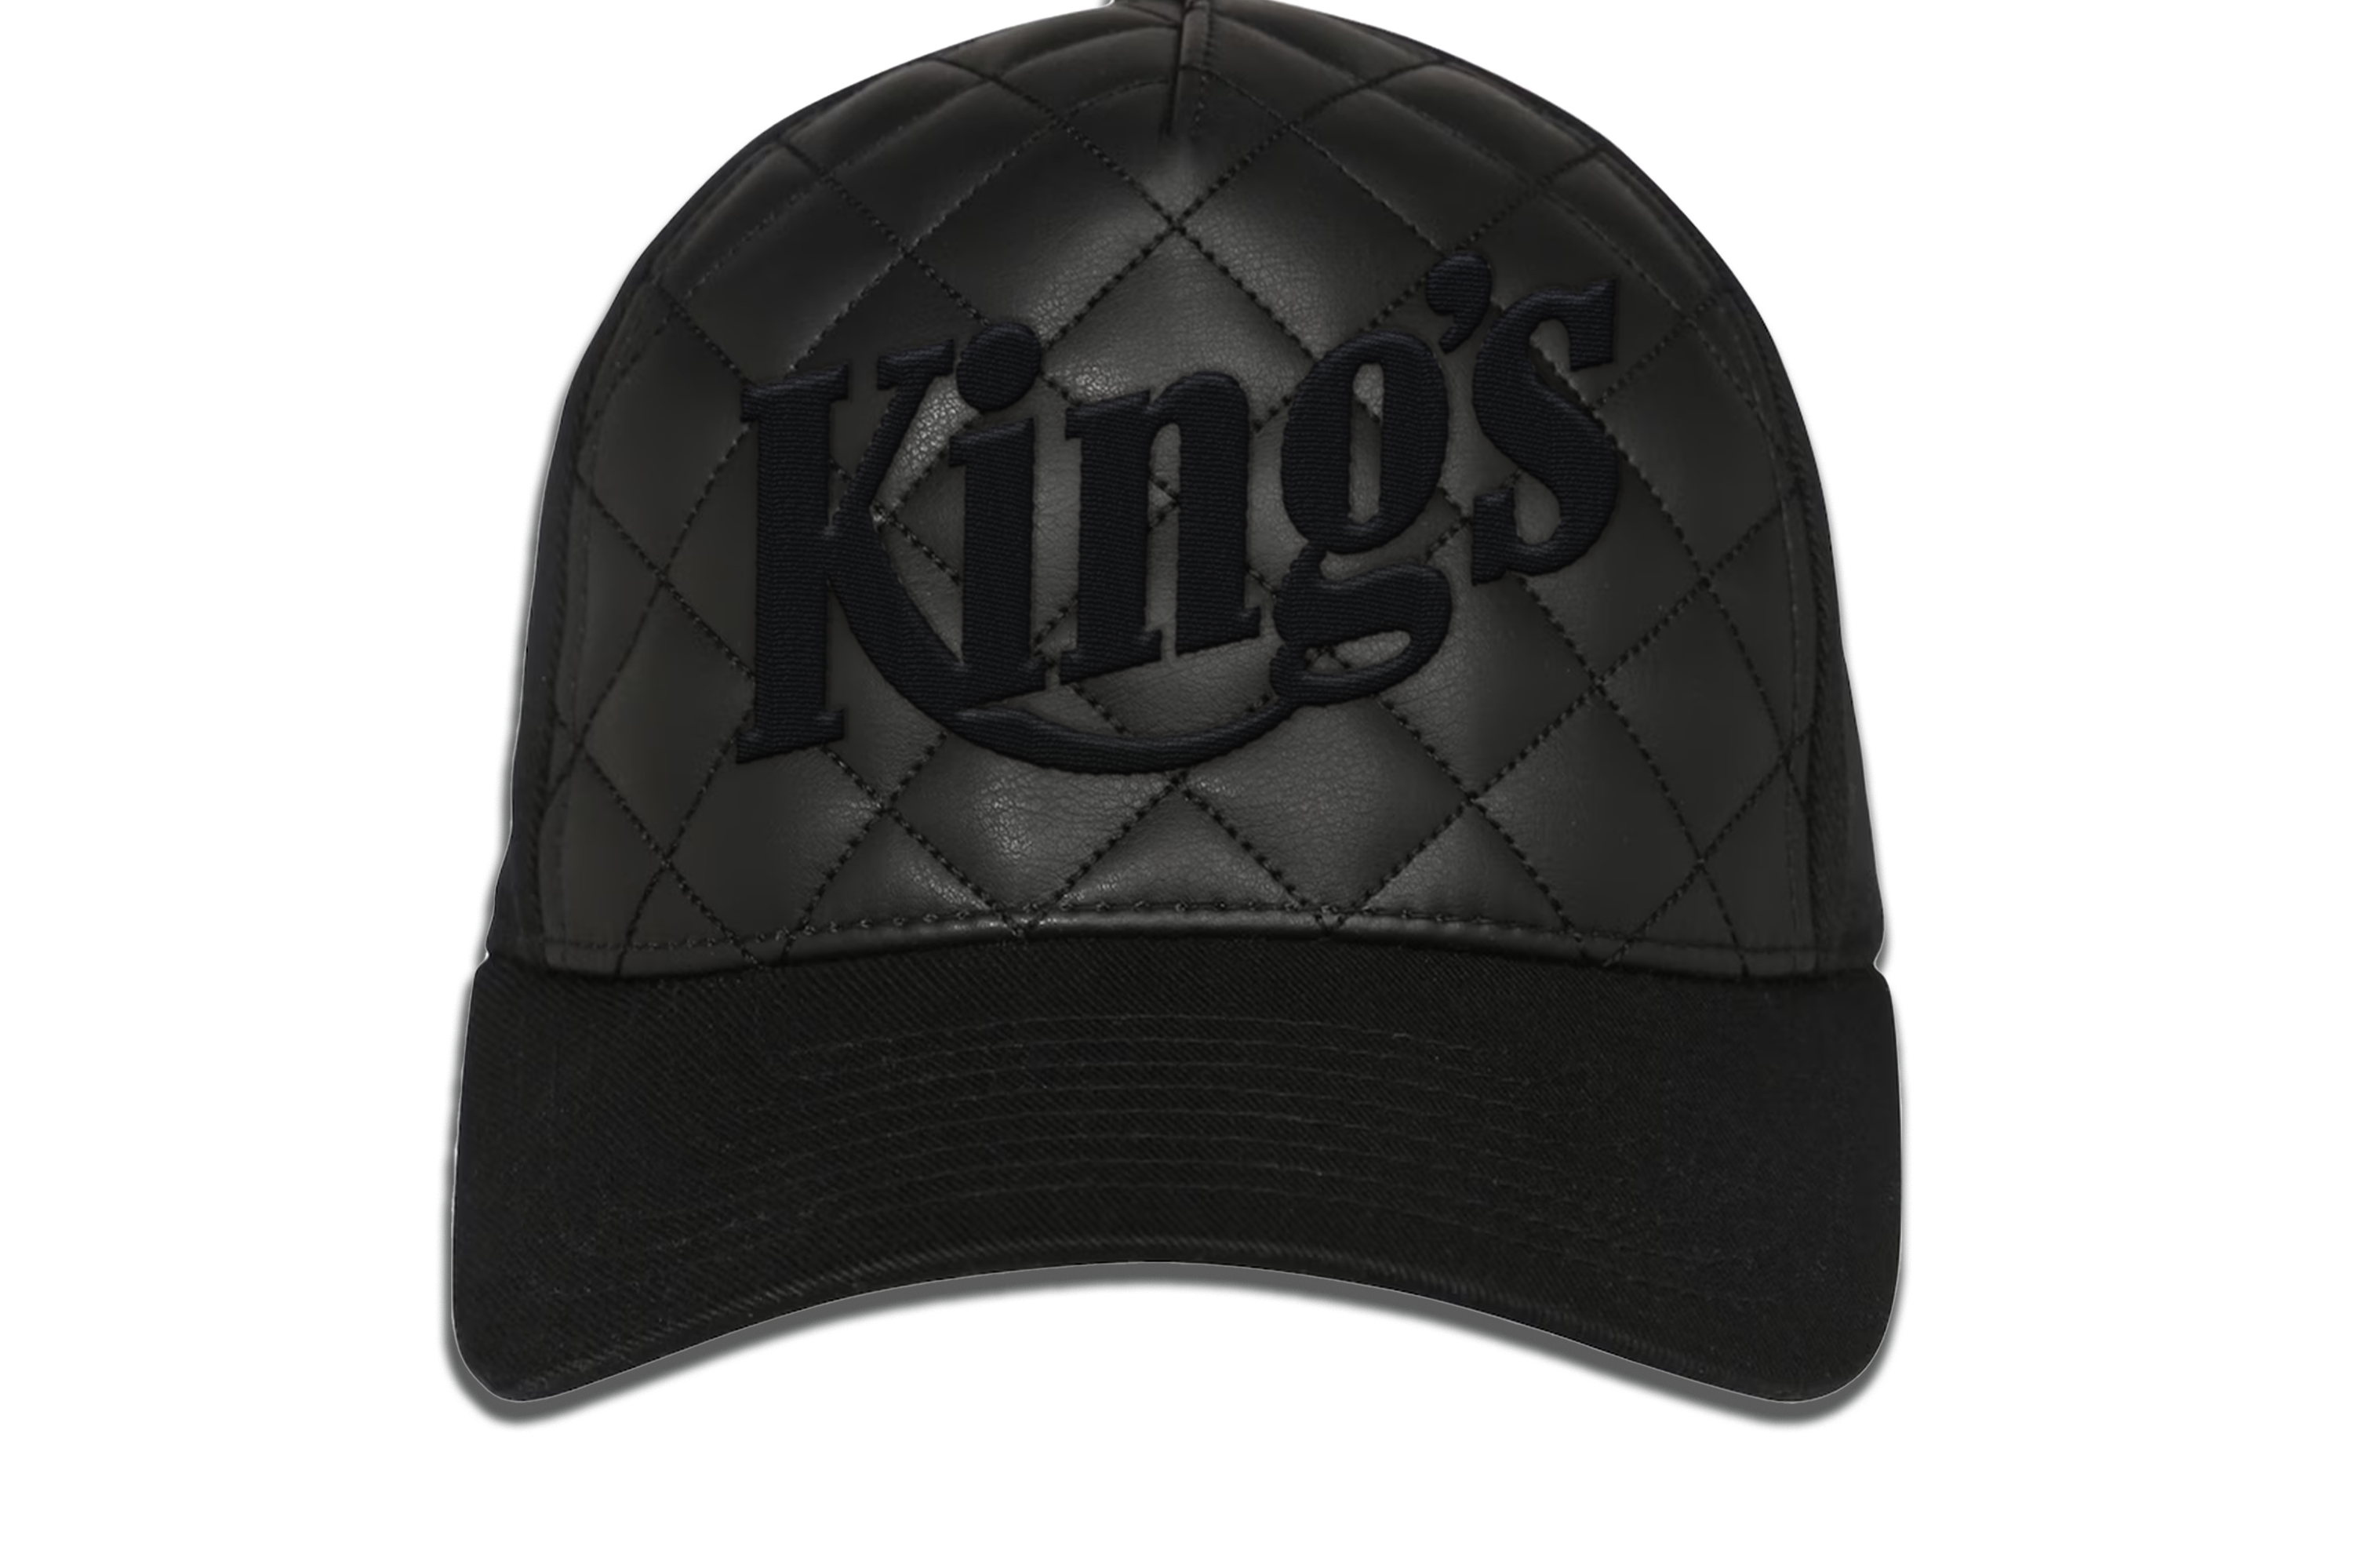 LAST KINGS “TUT” CAP HAT WITH ADJUSTABLE BUCKLE ROYAL